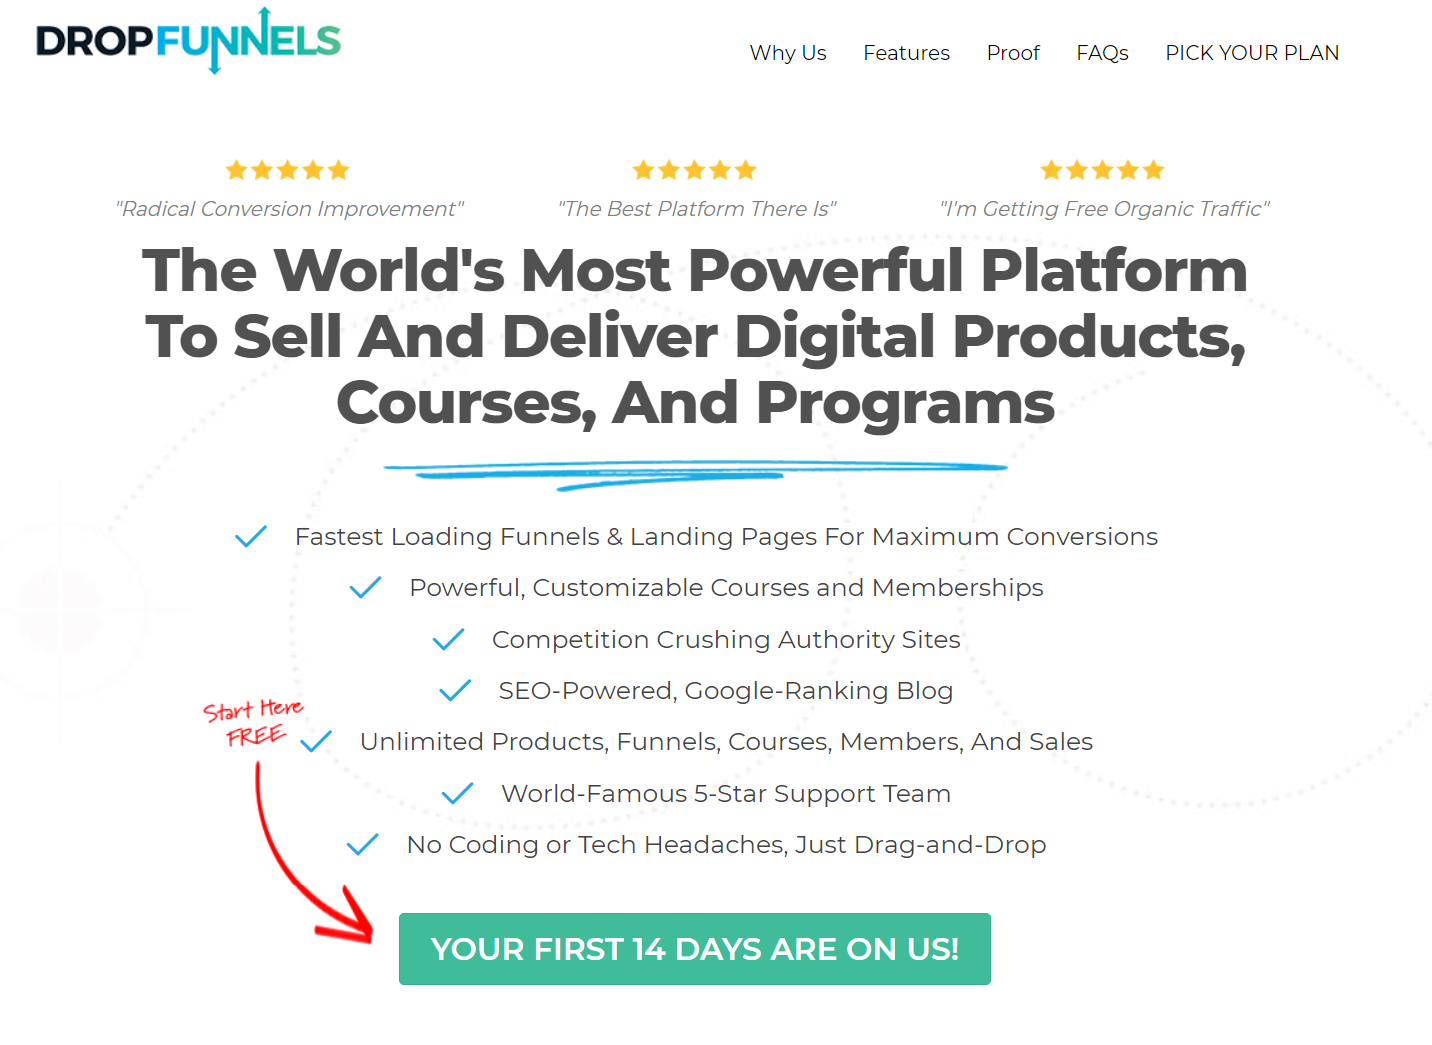 DropFunnels homepage